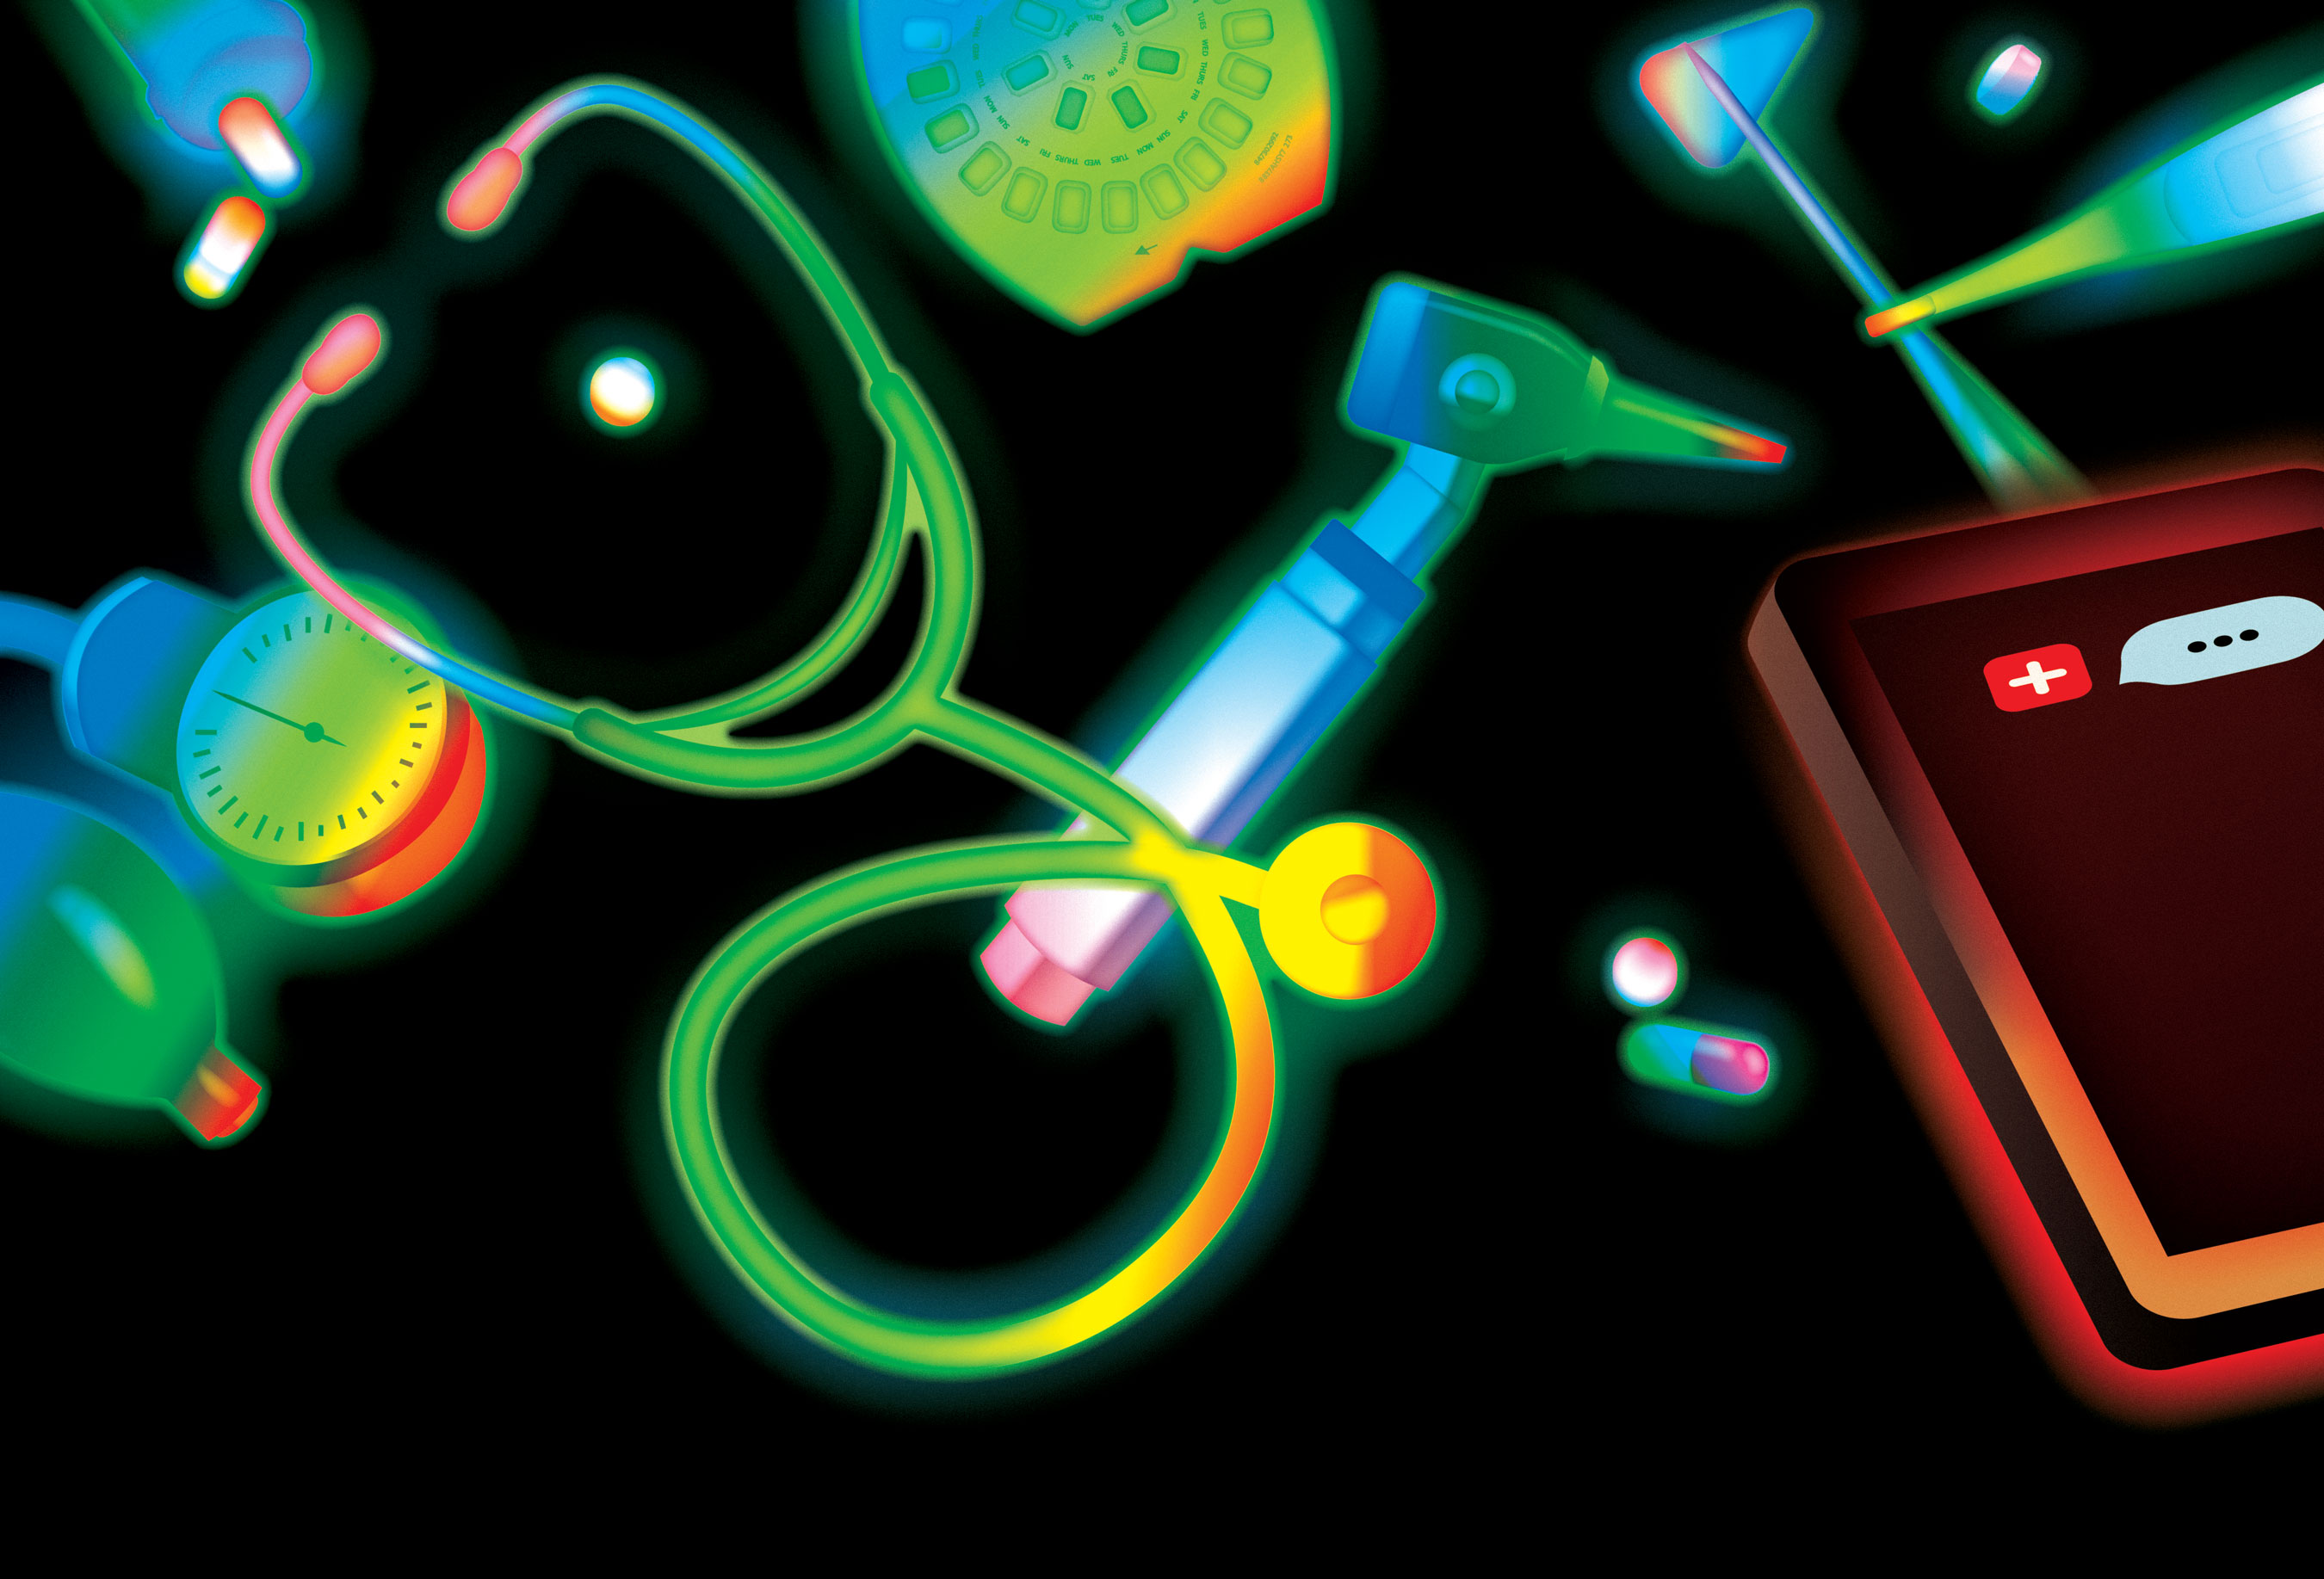 Illustration of medical equipment and ipad